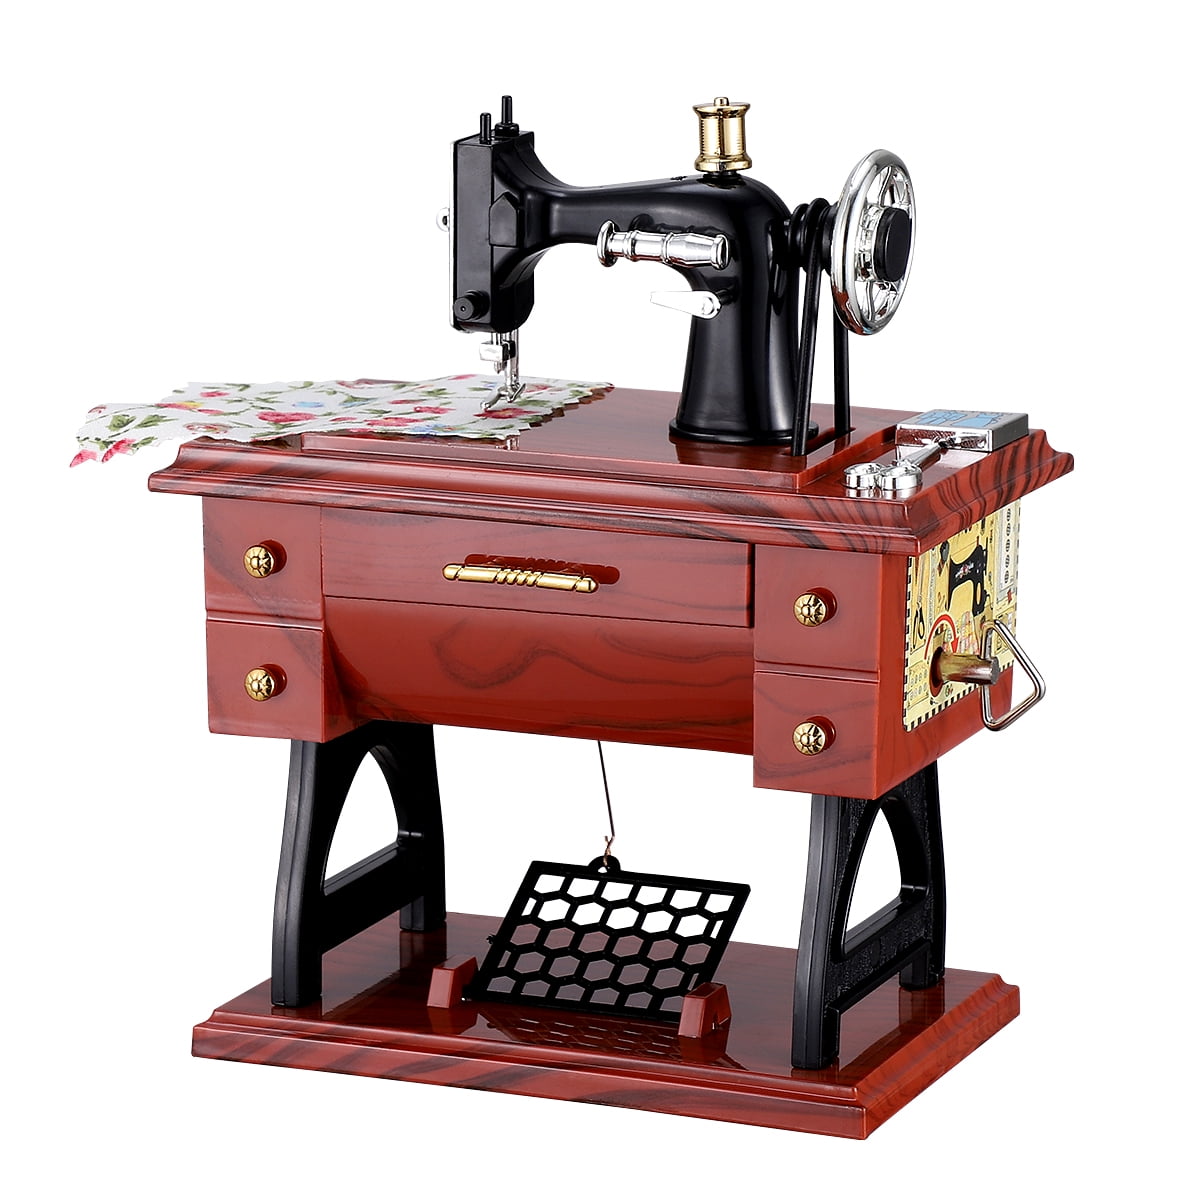  G Ganen Musical Sewing Machine Music Box Vintage Look (Brown-1)